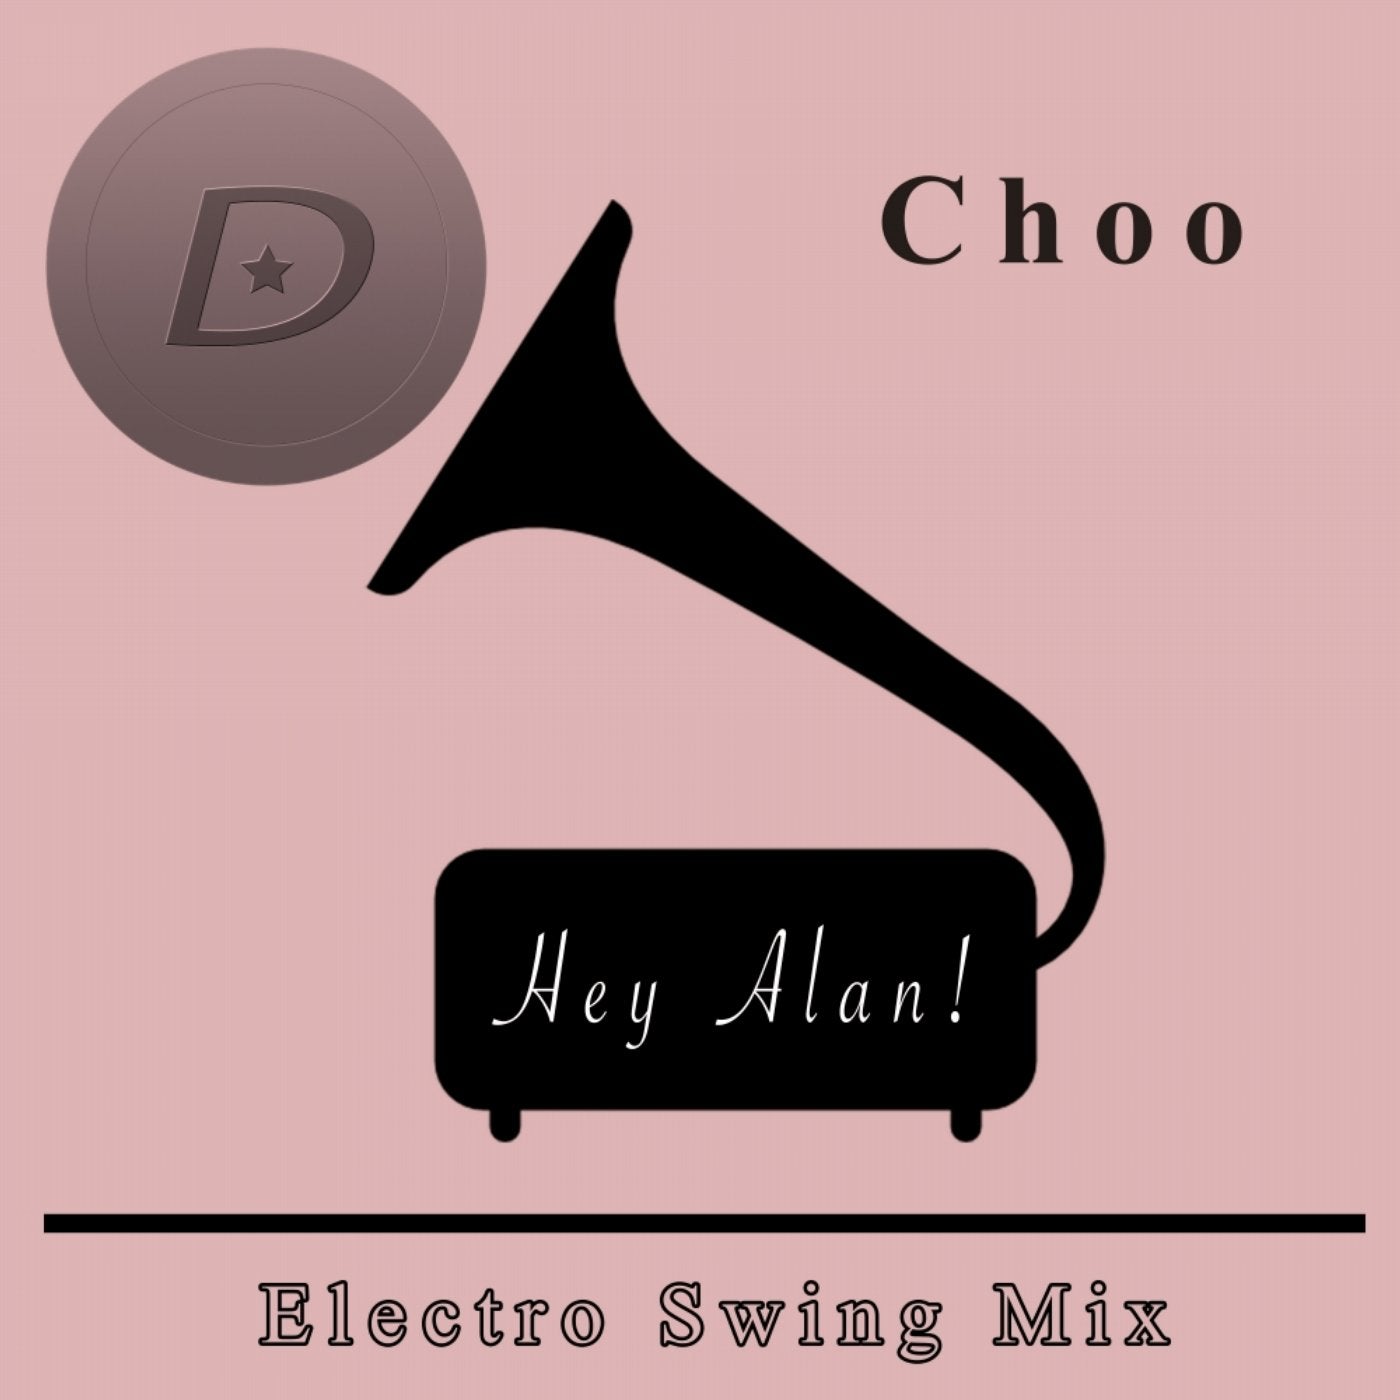 Choo (Electro Swing Mix)